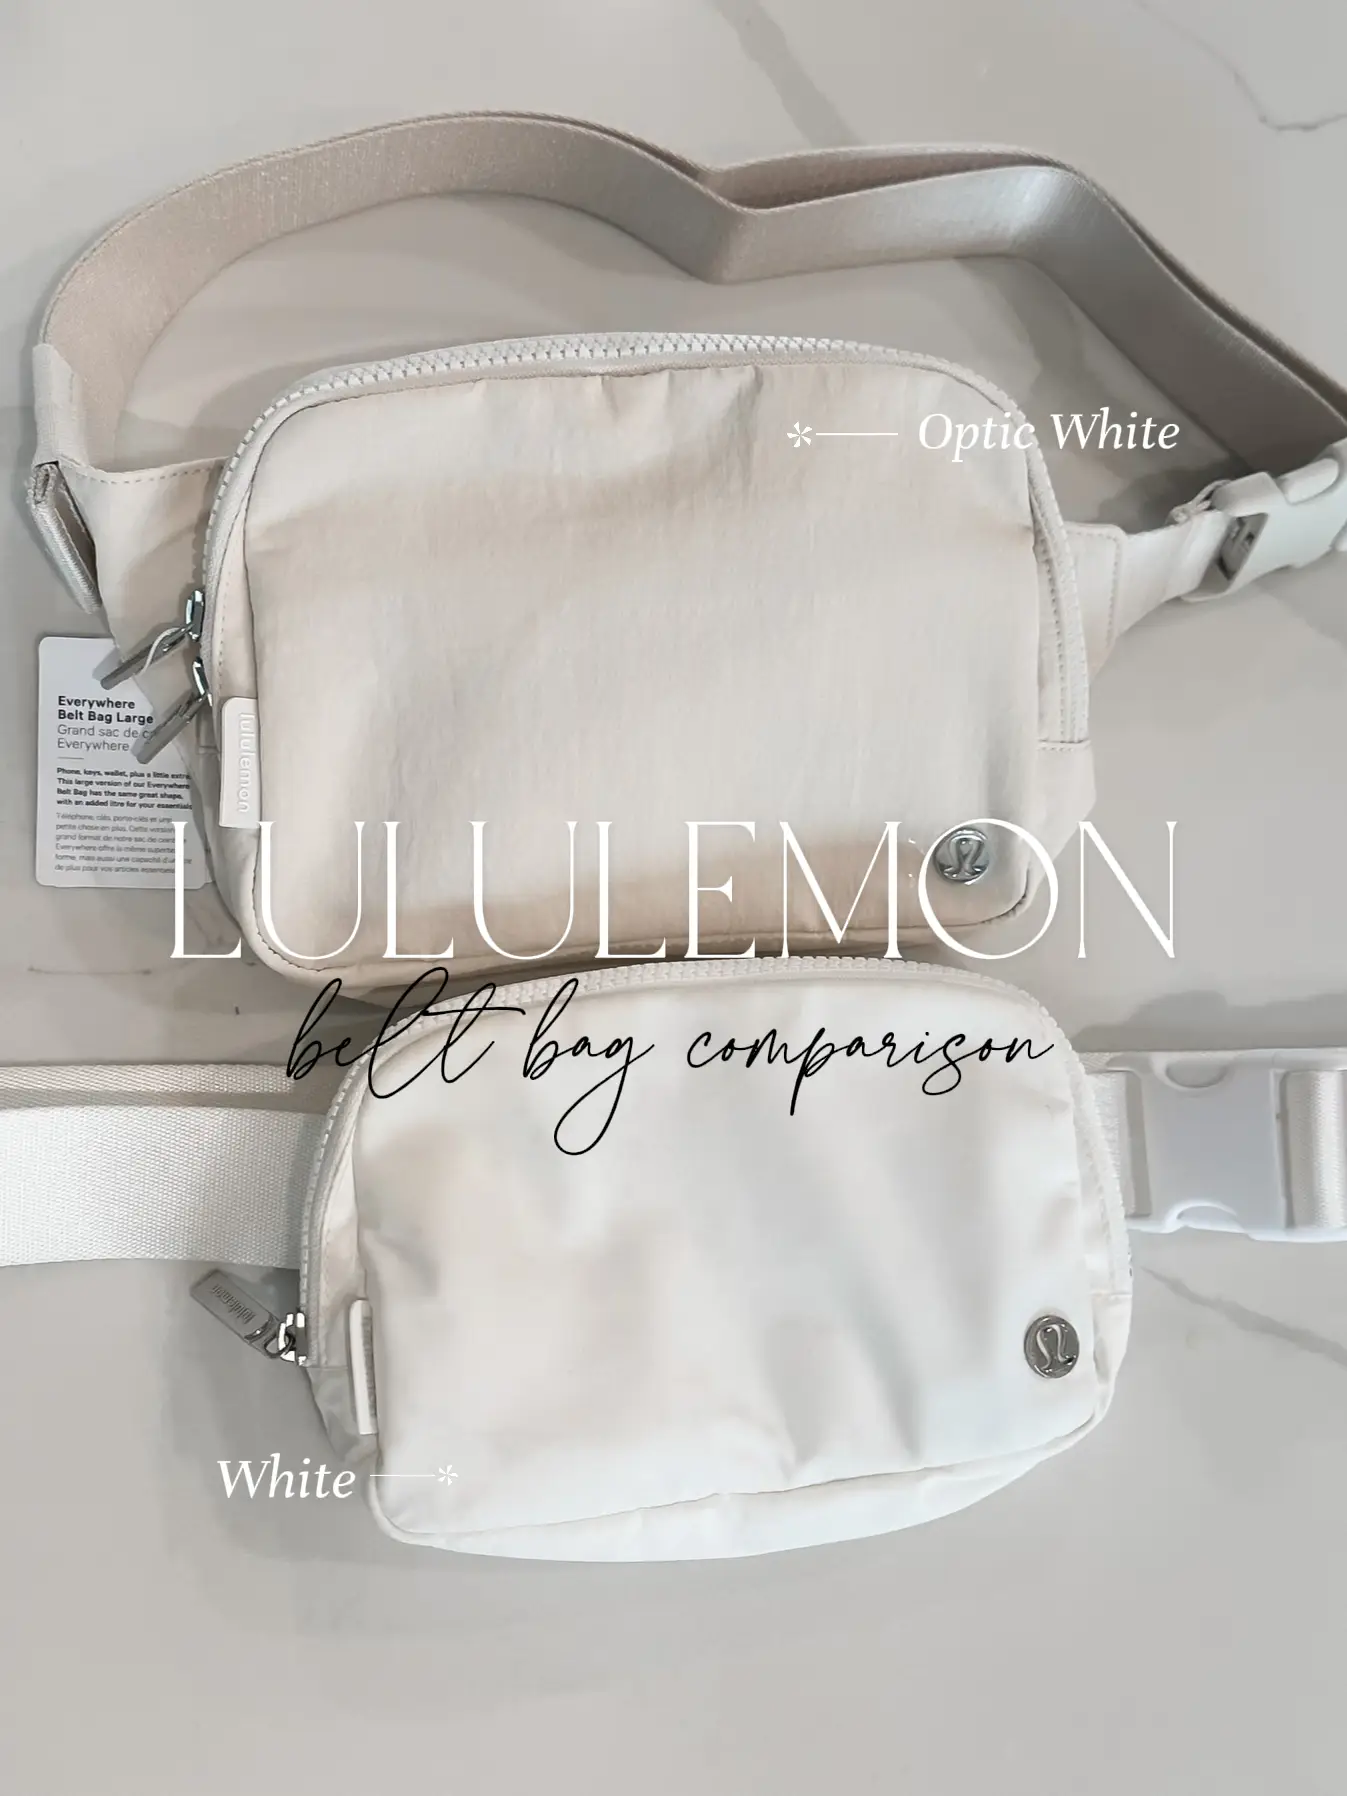 Lululemon Belt Bag Comparison, Gallery posted by Amanda Silber